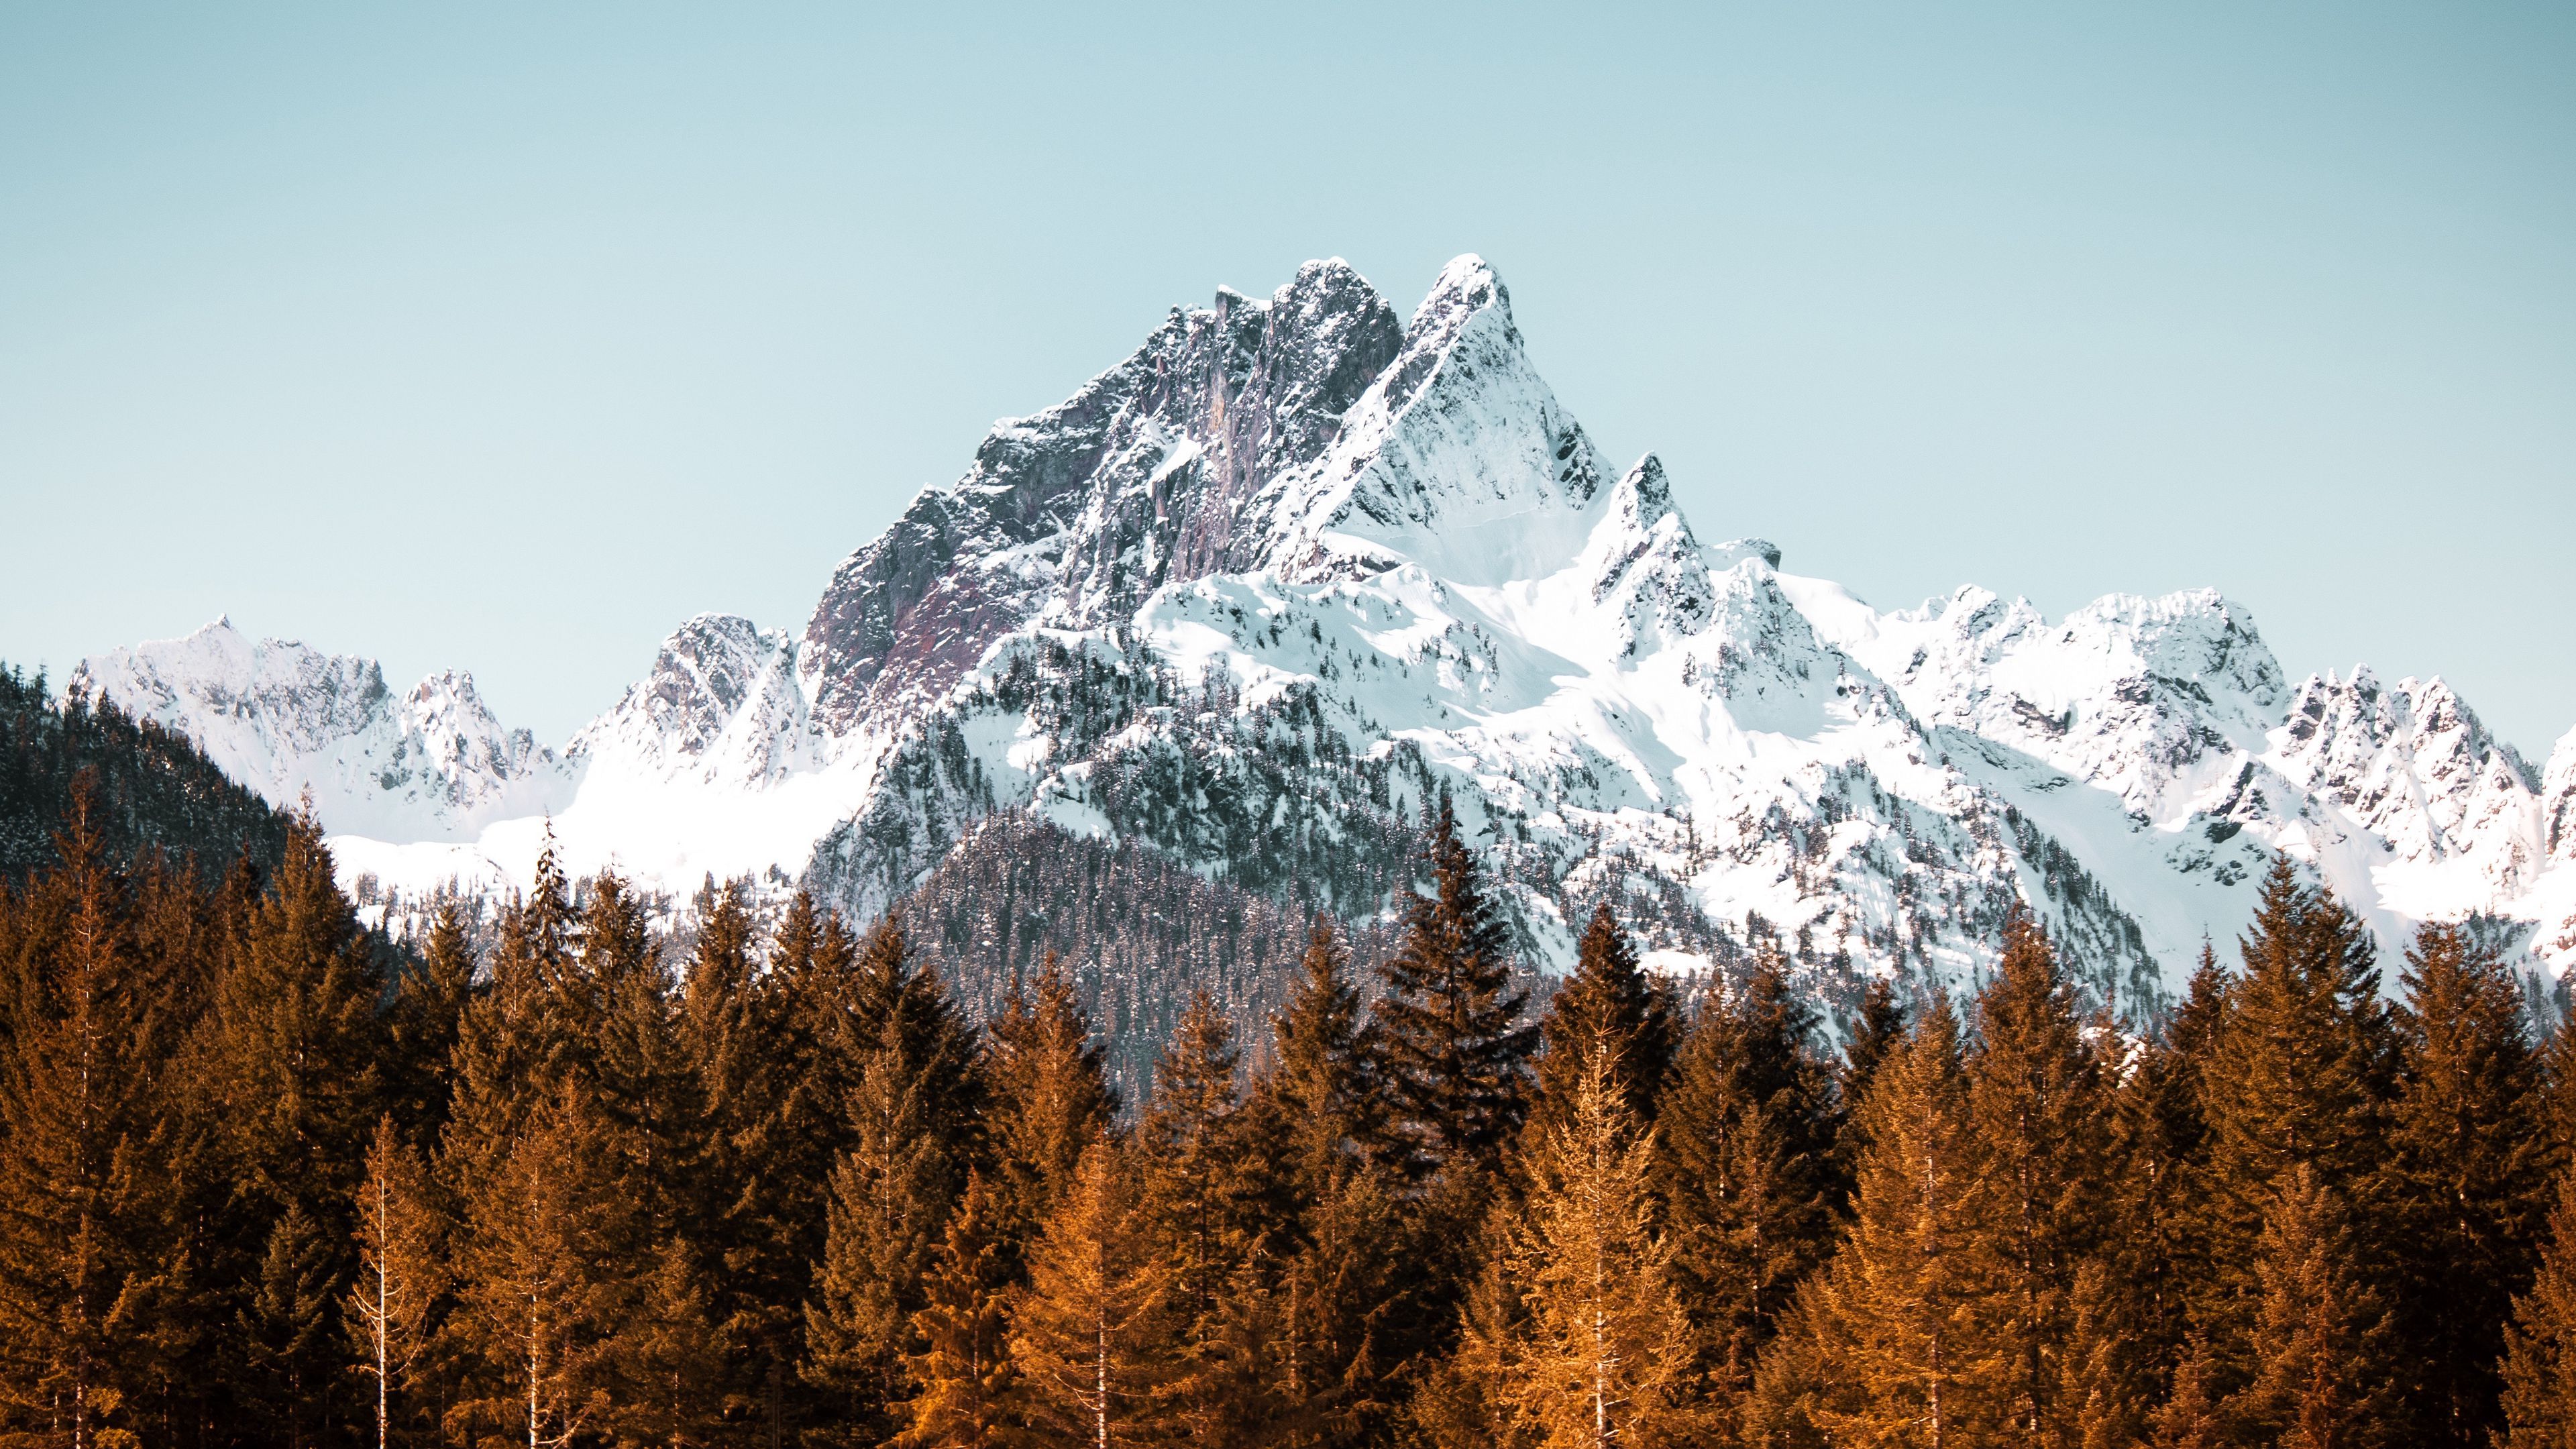 Download wallpaper 3840x2160 mountain, forest, trees, peak, snowy 4k uhd 16:9 HD background